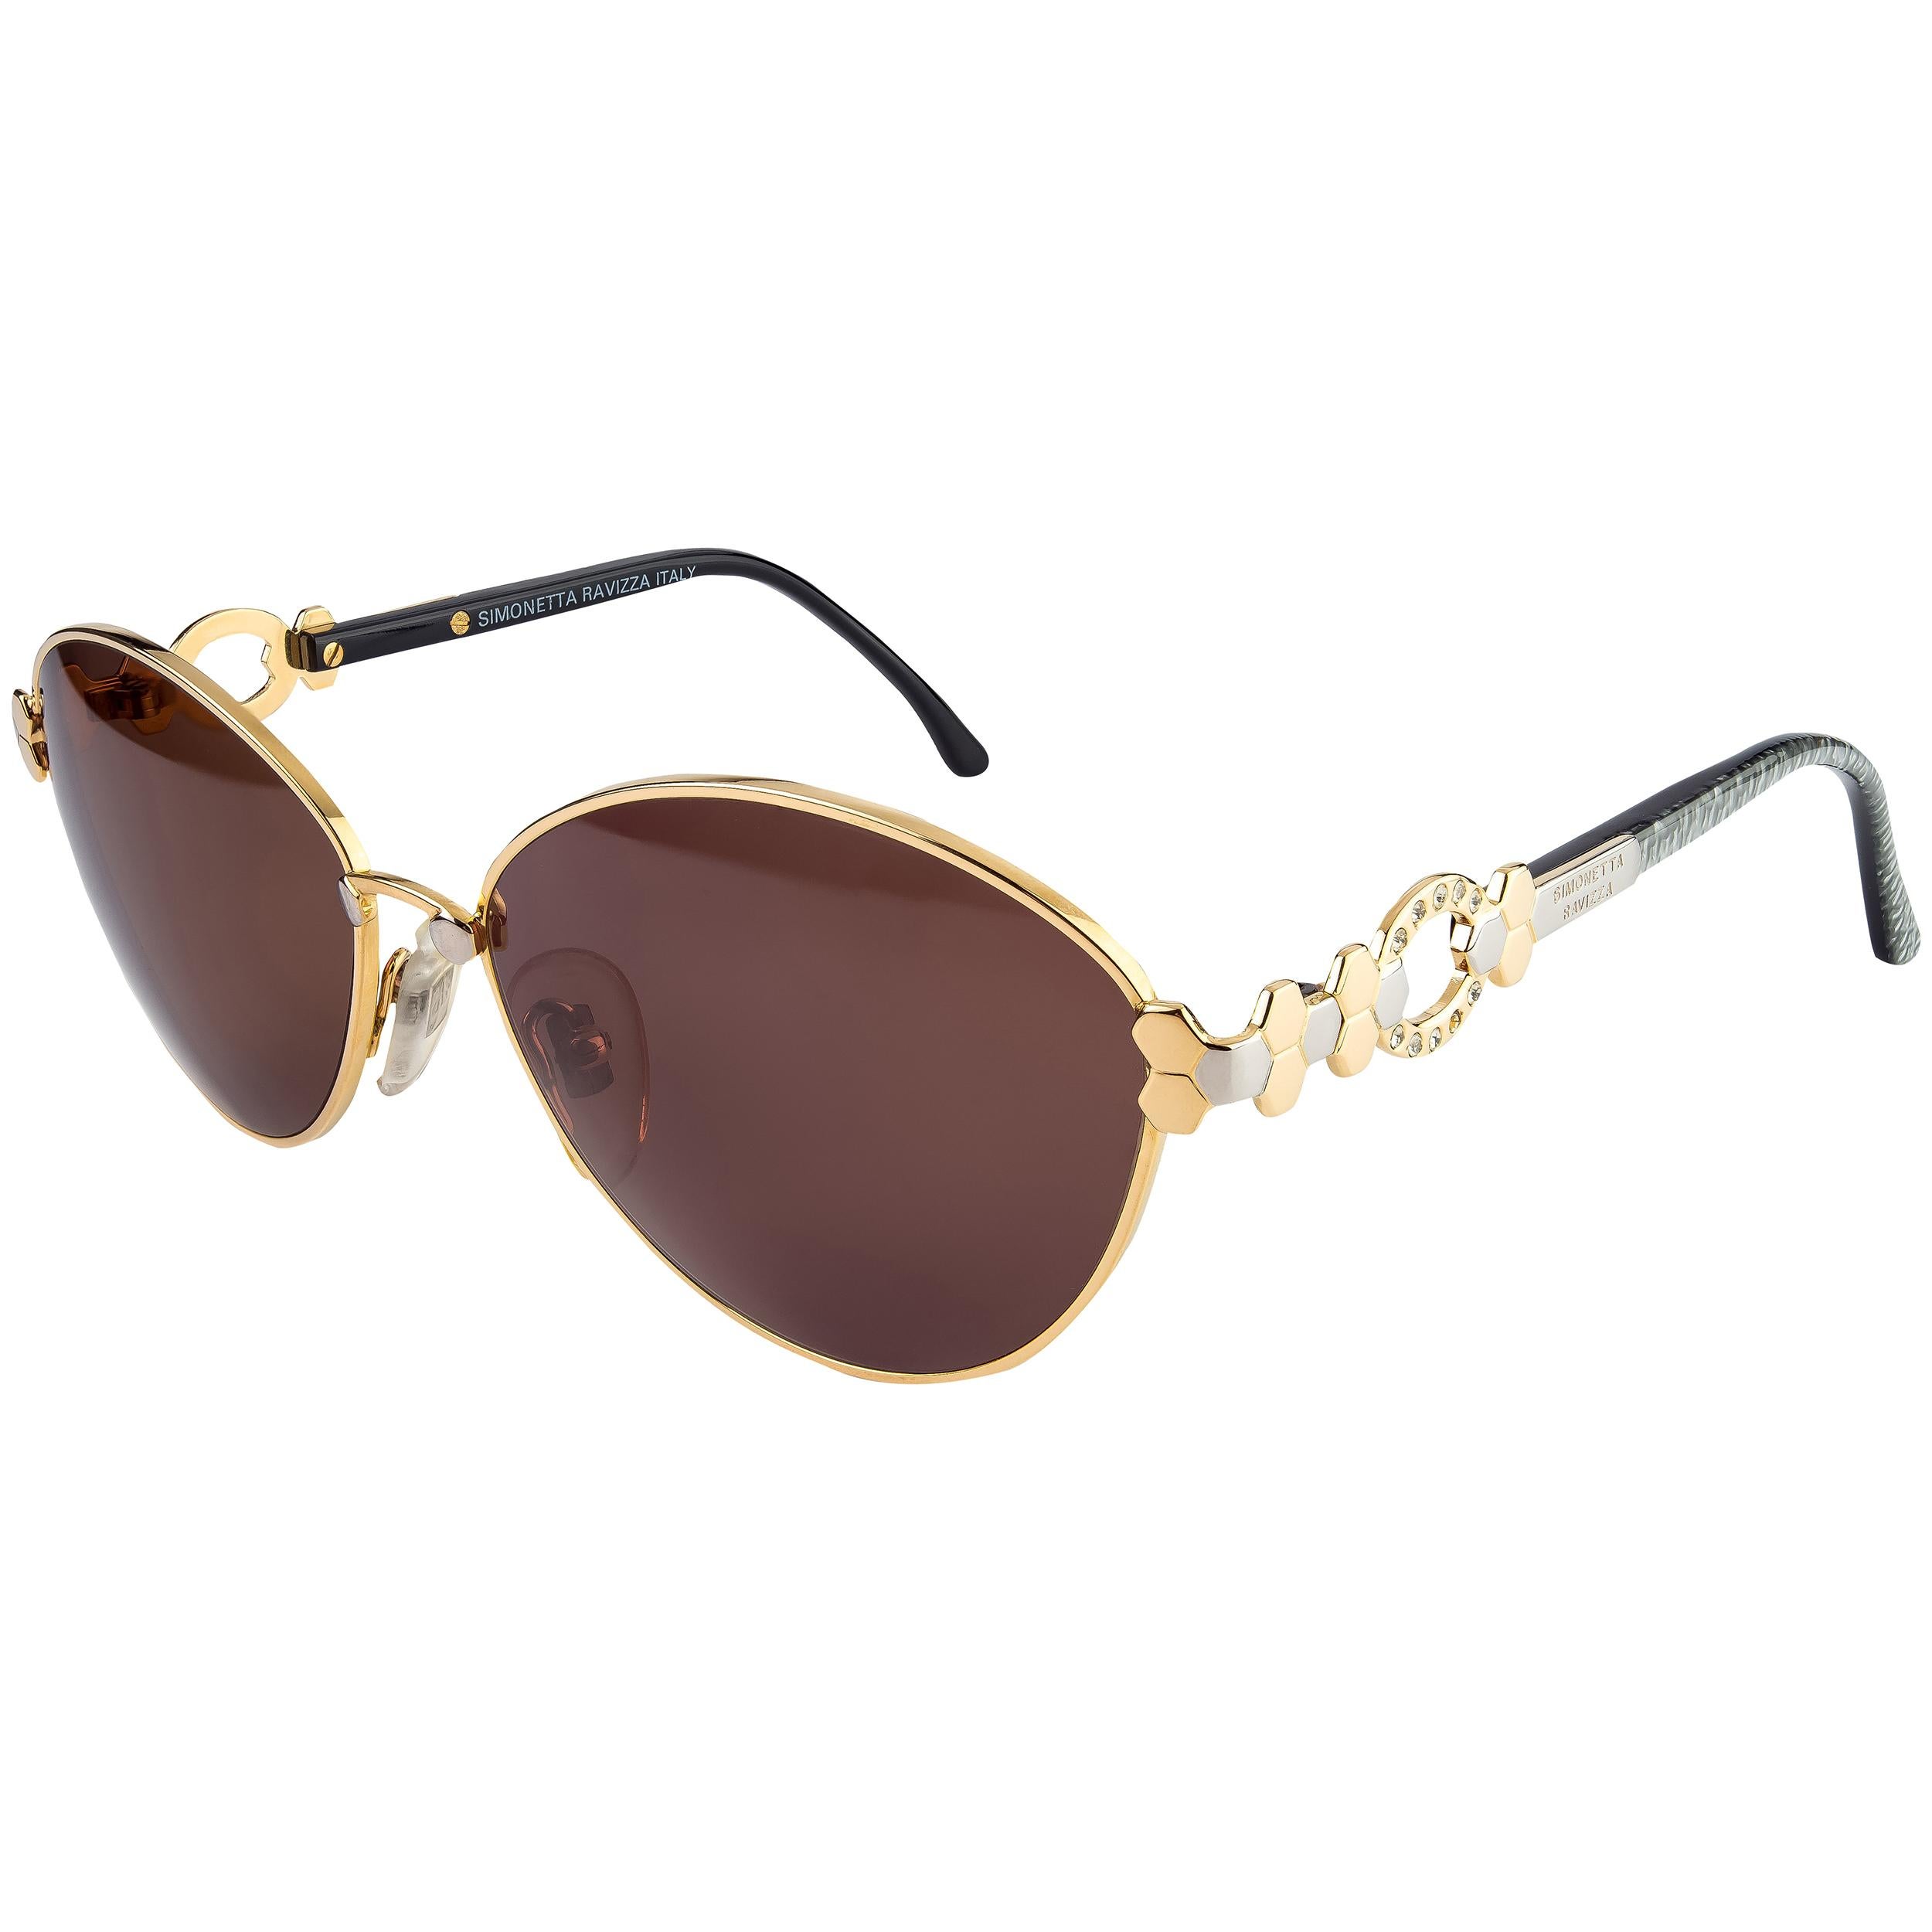 Simonetta Ravizza vintage sunglasses with stones